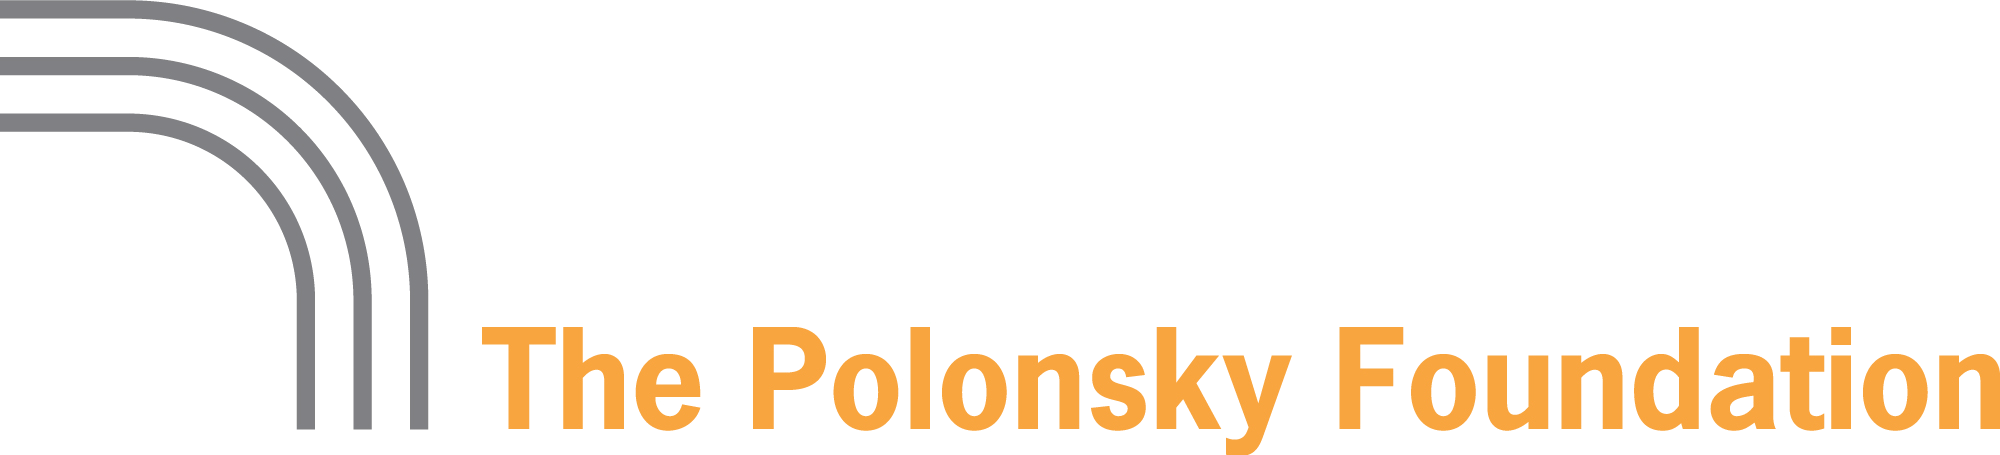 Logo The Polonsky Foundation